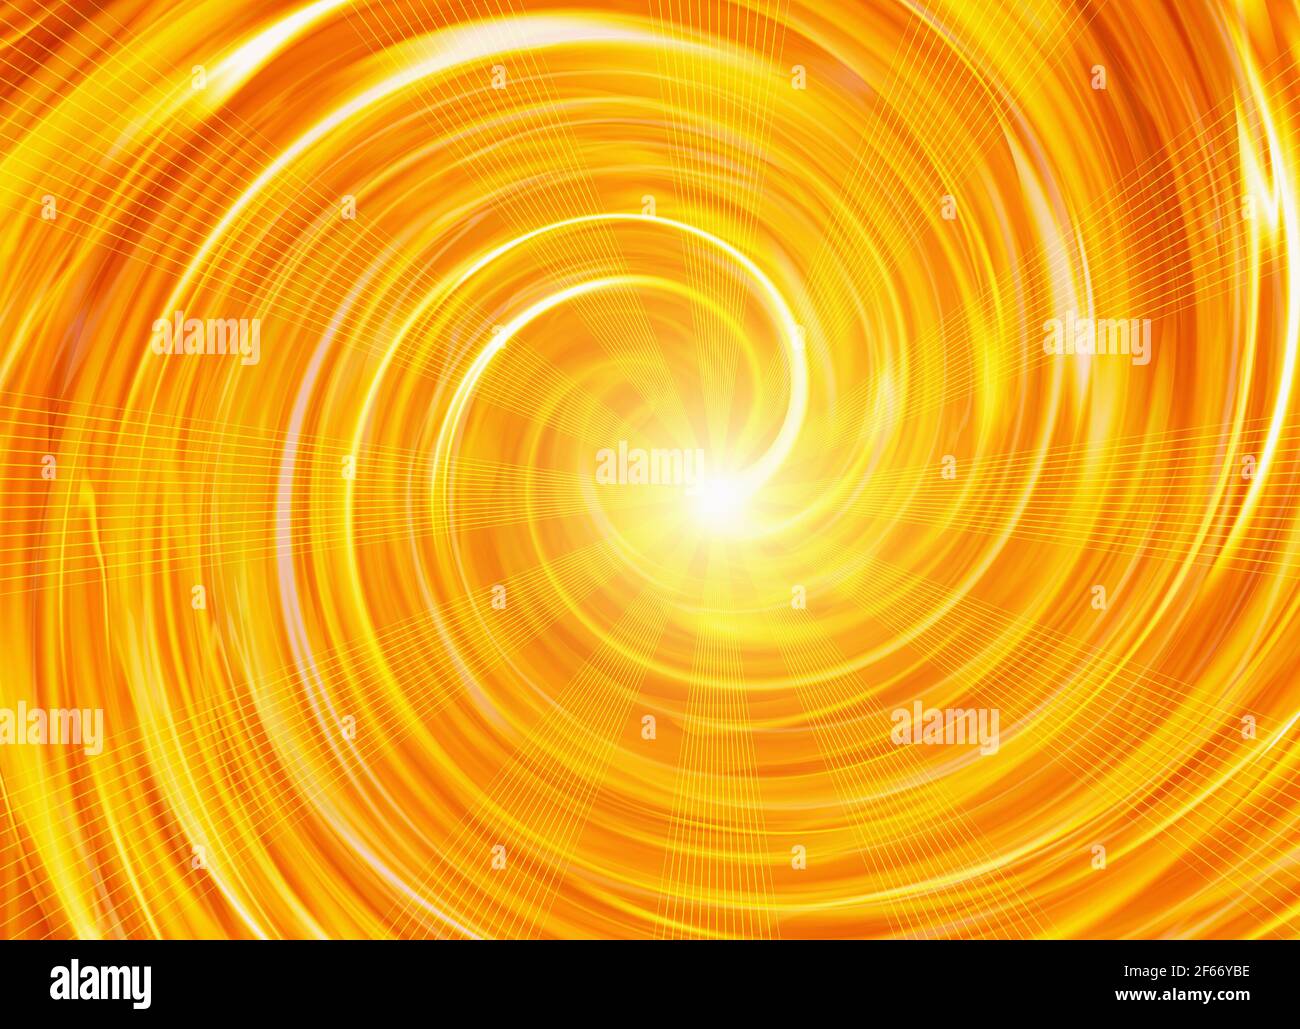 sun twirl rays background Stock Photo